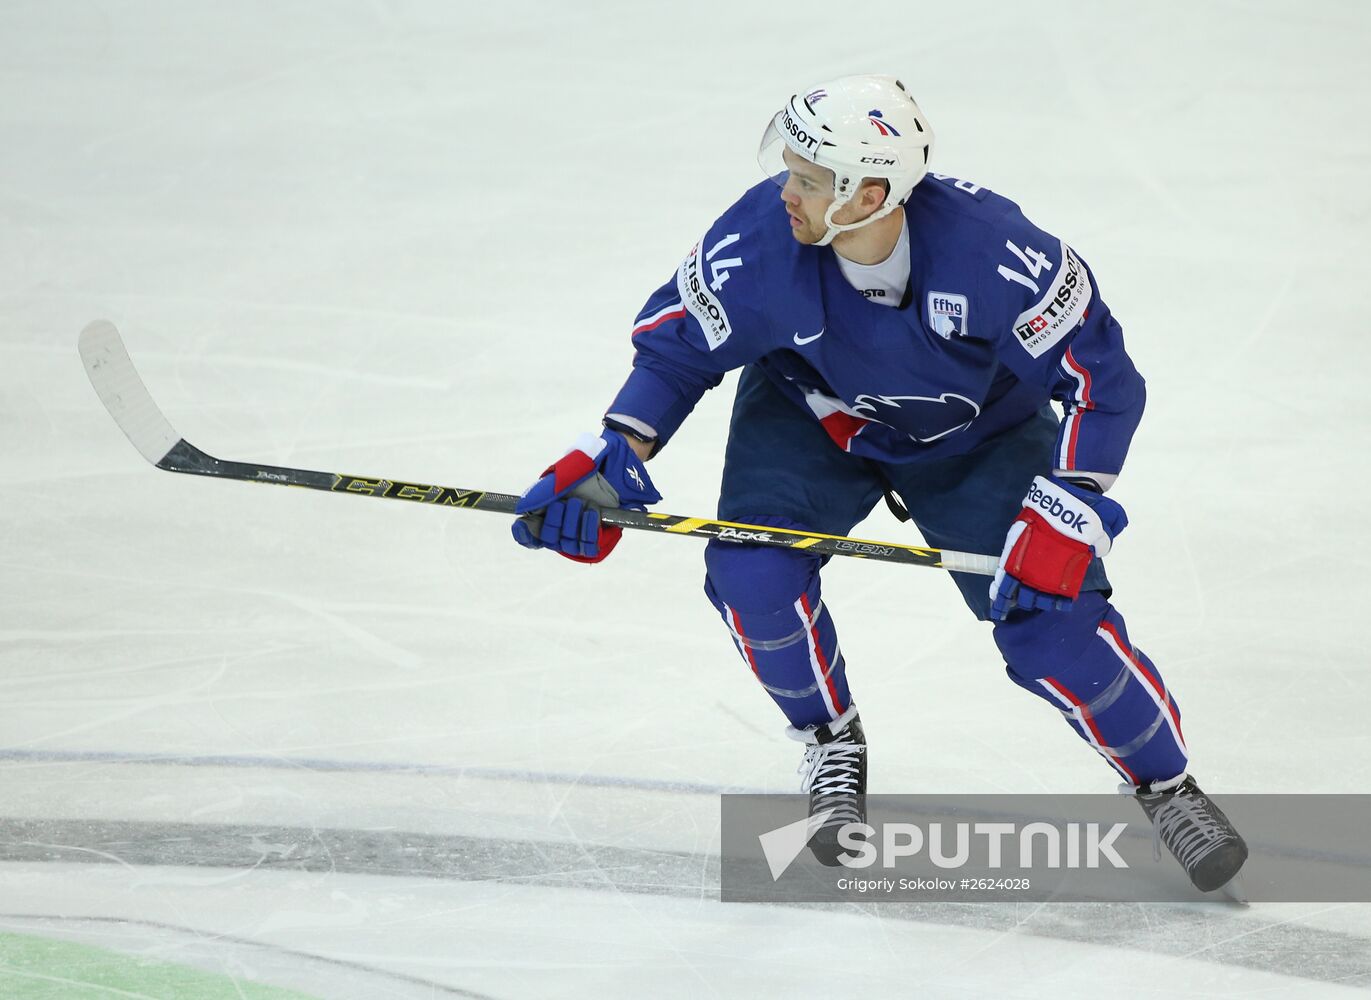 2015 Men's World Ice Hockey Championships. Latvia vs. France